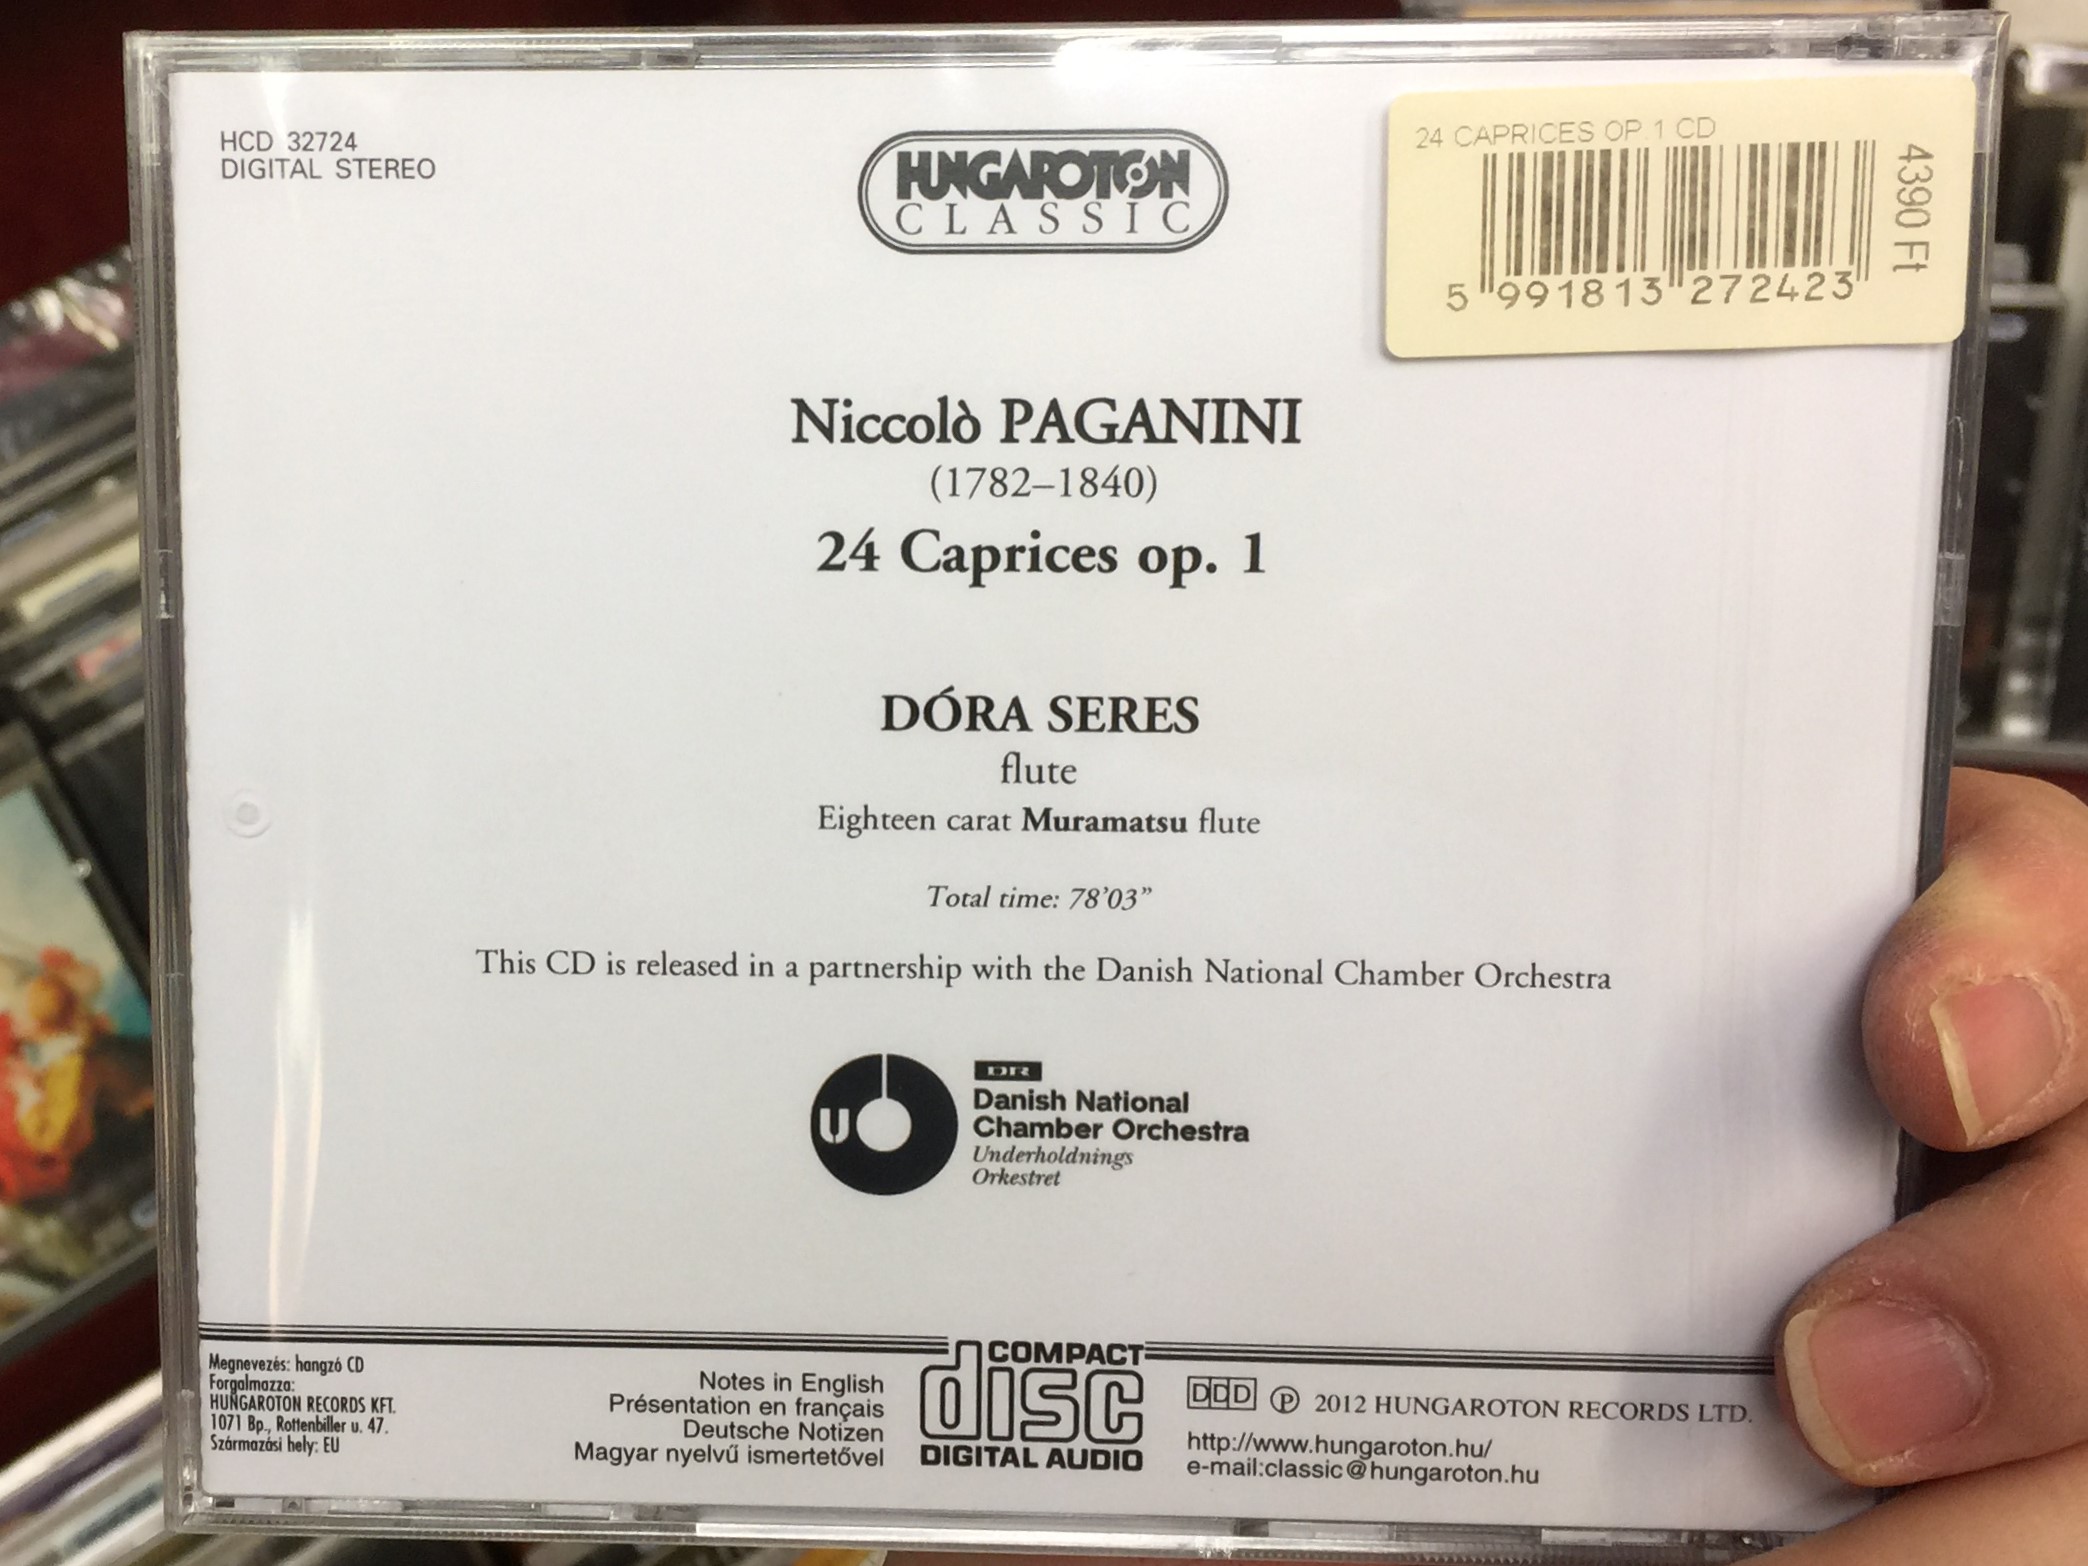 paganini-24-caprices-op.-1-d-ra-seres-flute-hungaroton-classic-audio-cd-2012-stereo-hcd-32724-2-.jpg